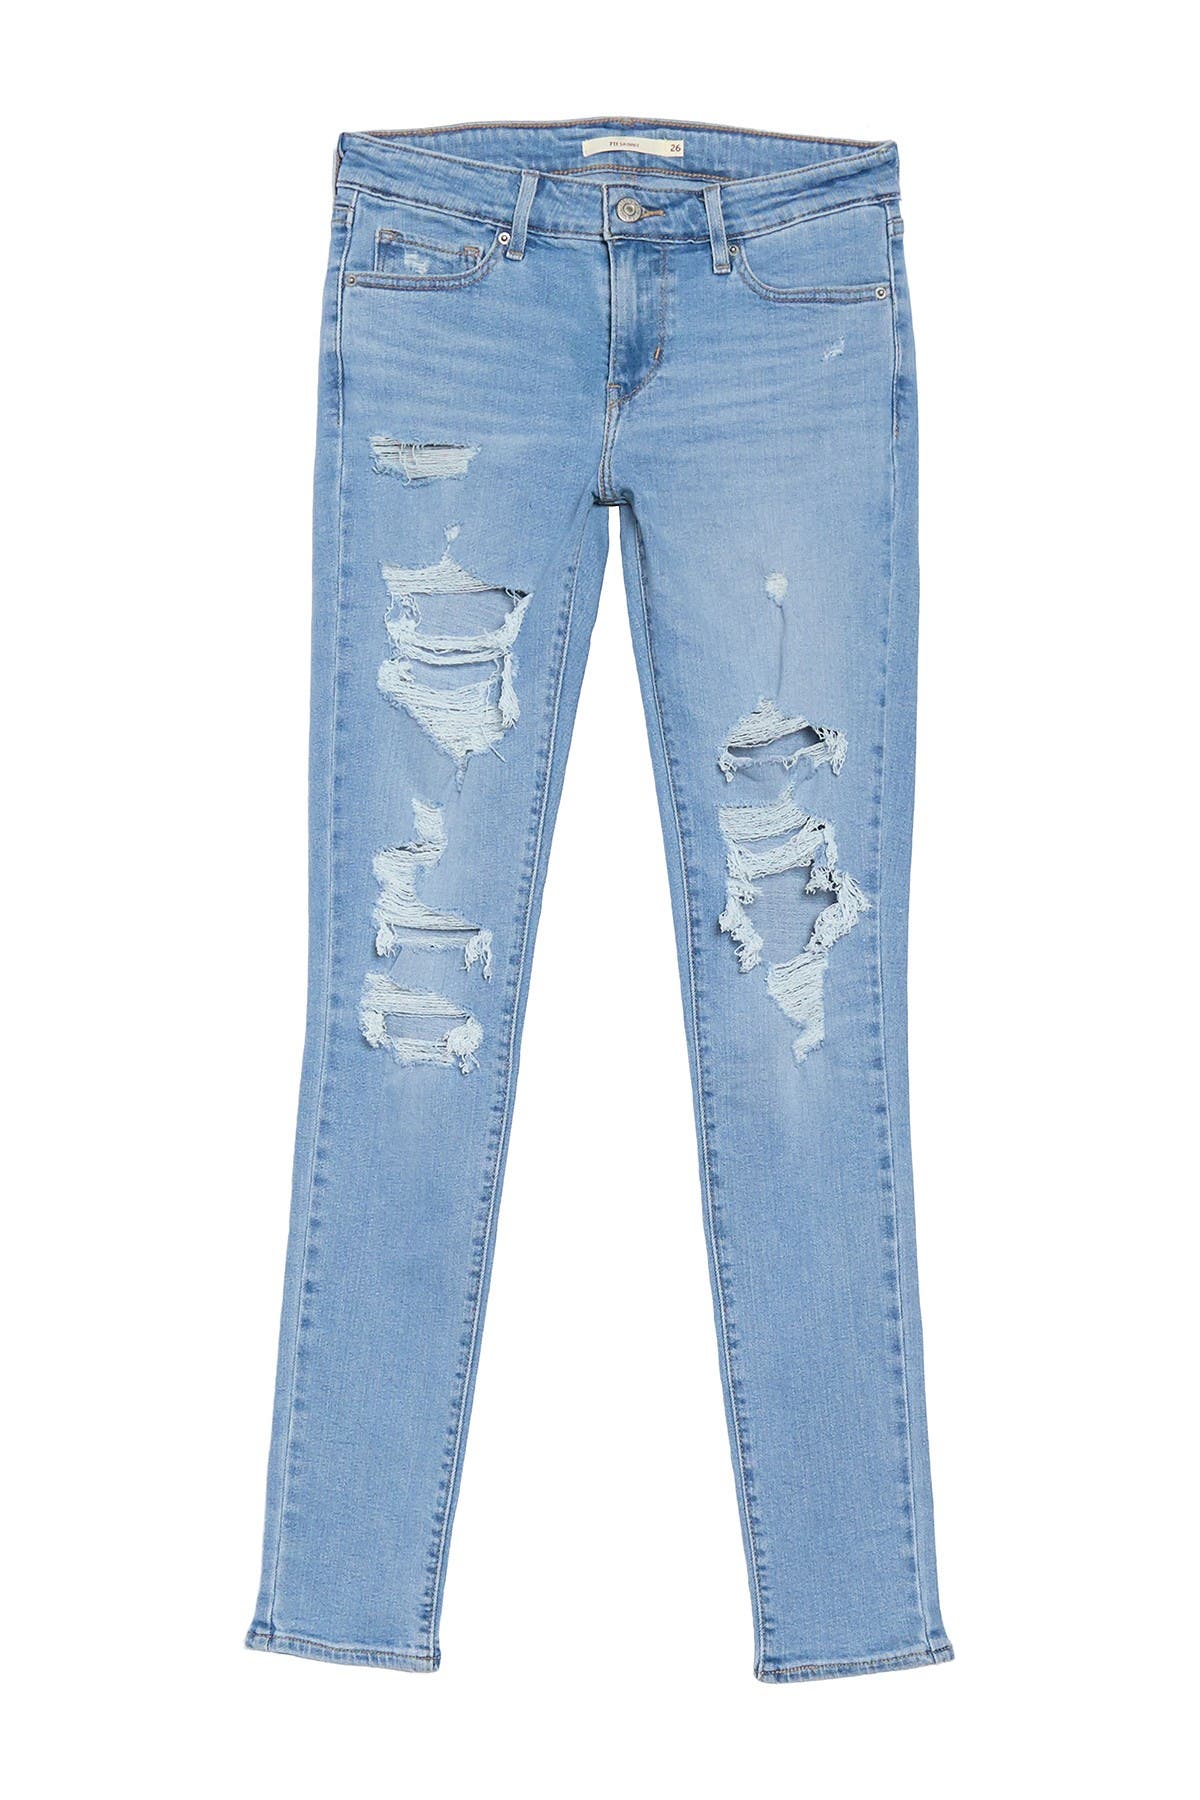 Levi's | 711 Distressed Skinny Jeans 